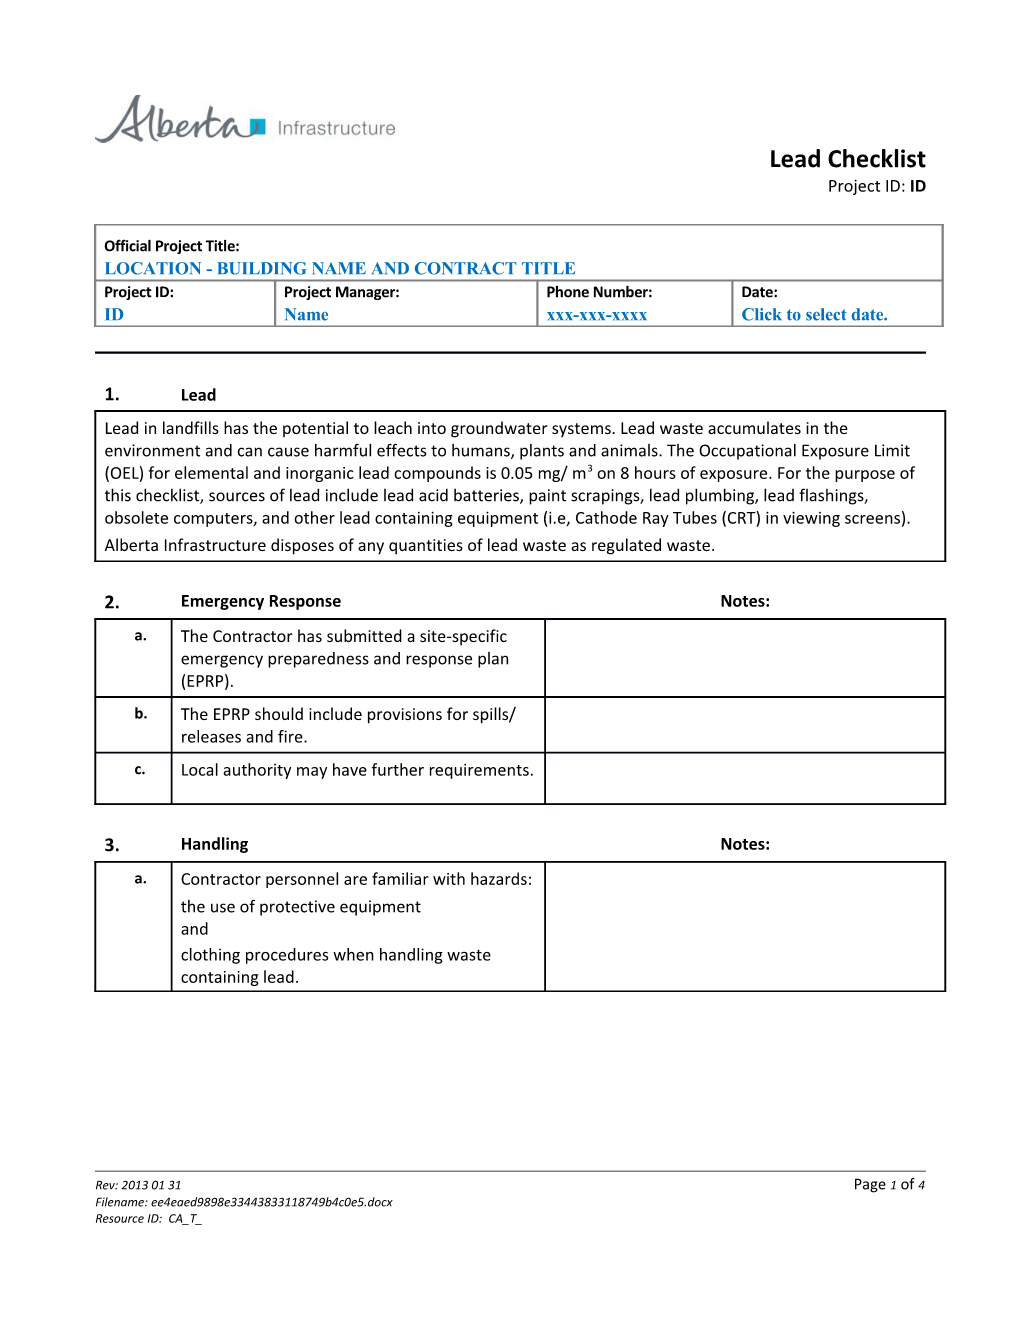 EMS Lead Checklist Template